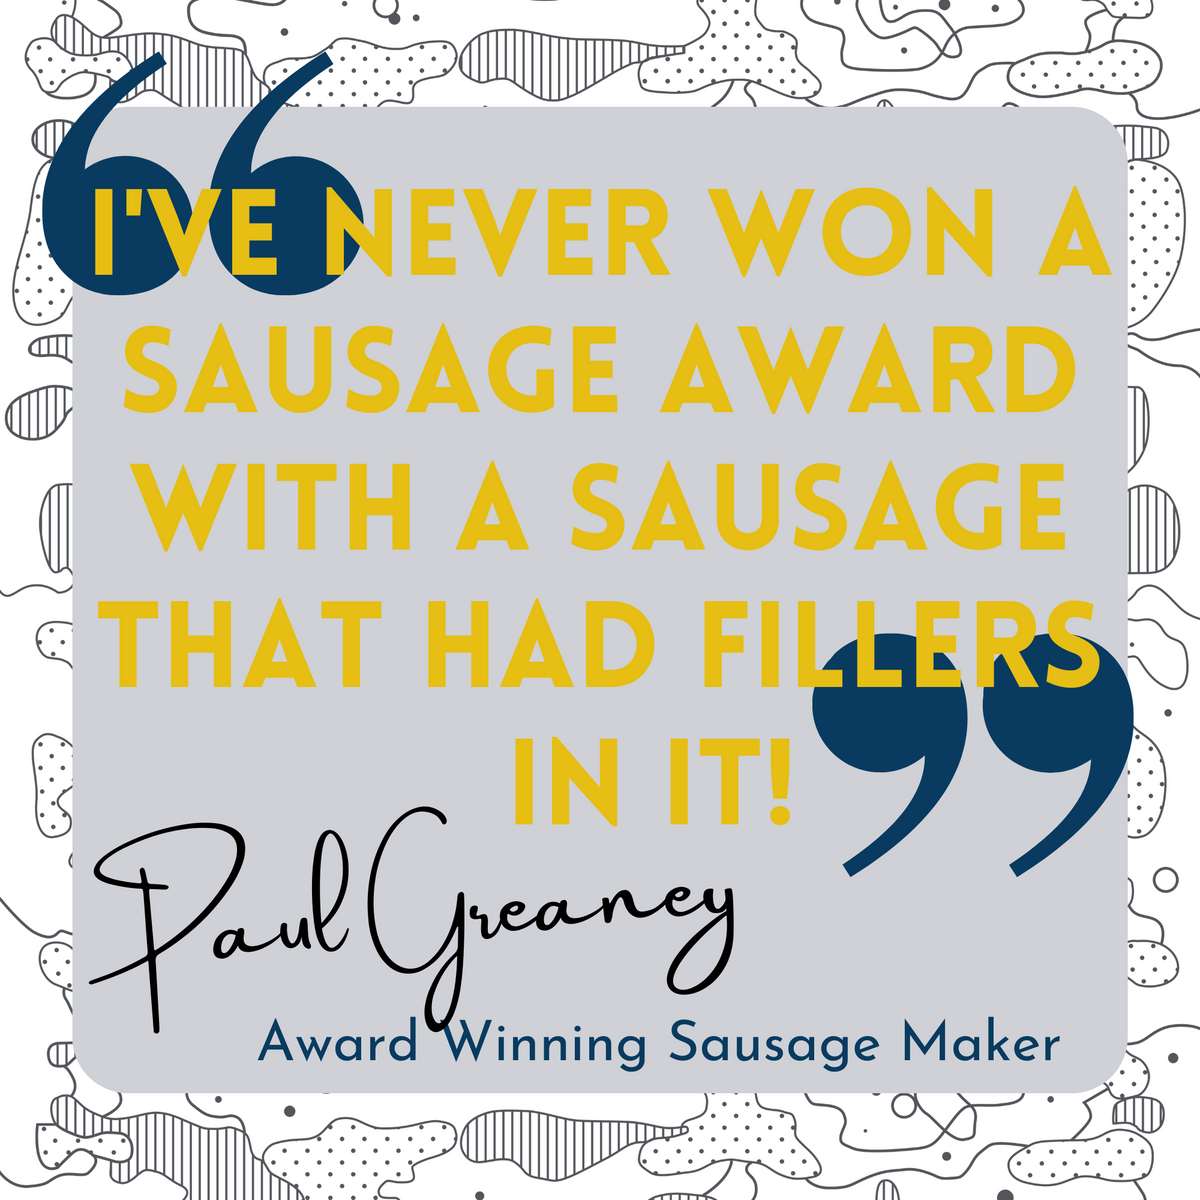 Sausage Seasoning Pack: Goes With Everything&#39; Sausage 200g x6 Packs